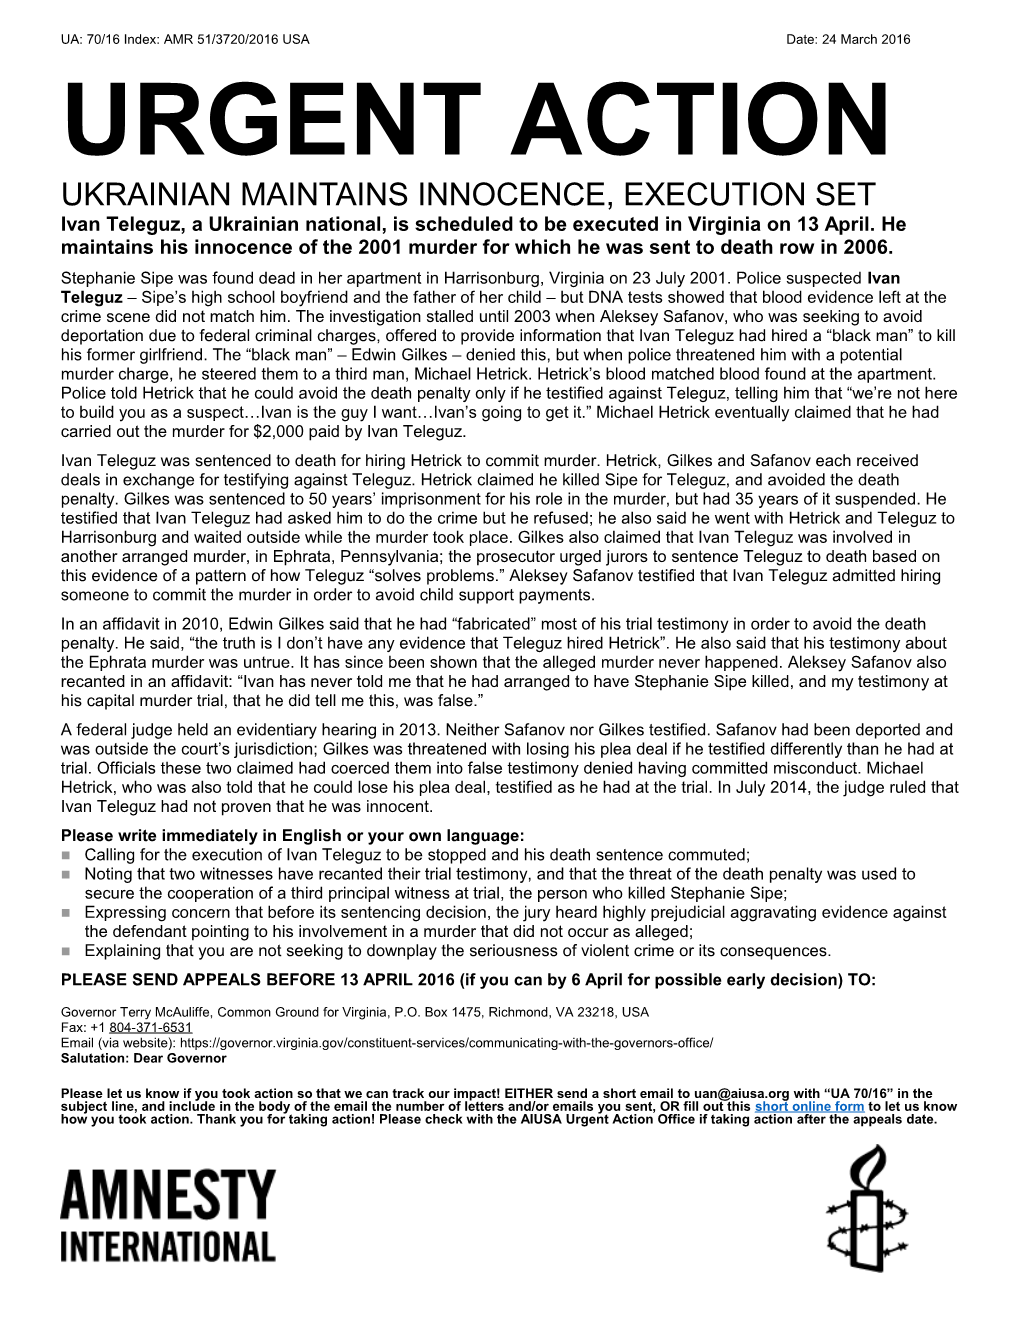 Ukrainian Maintains Innocence, Execution Set